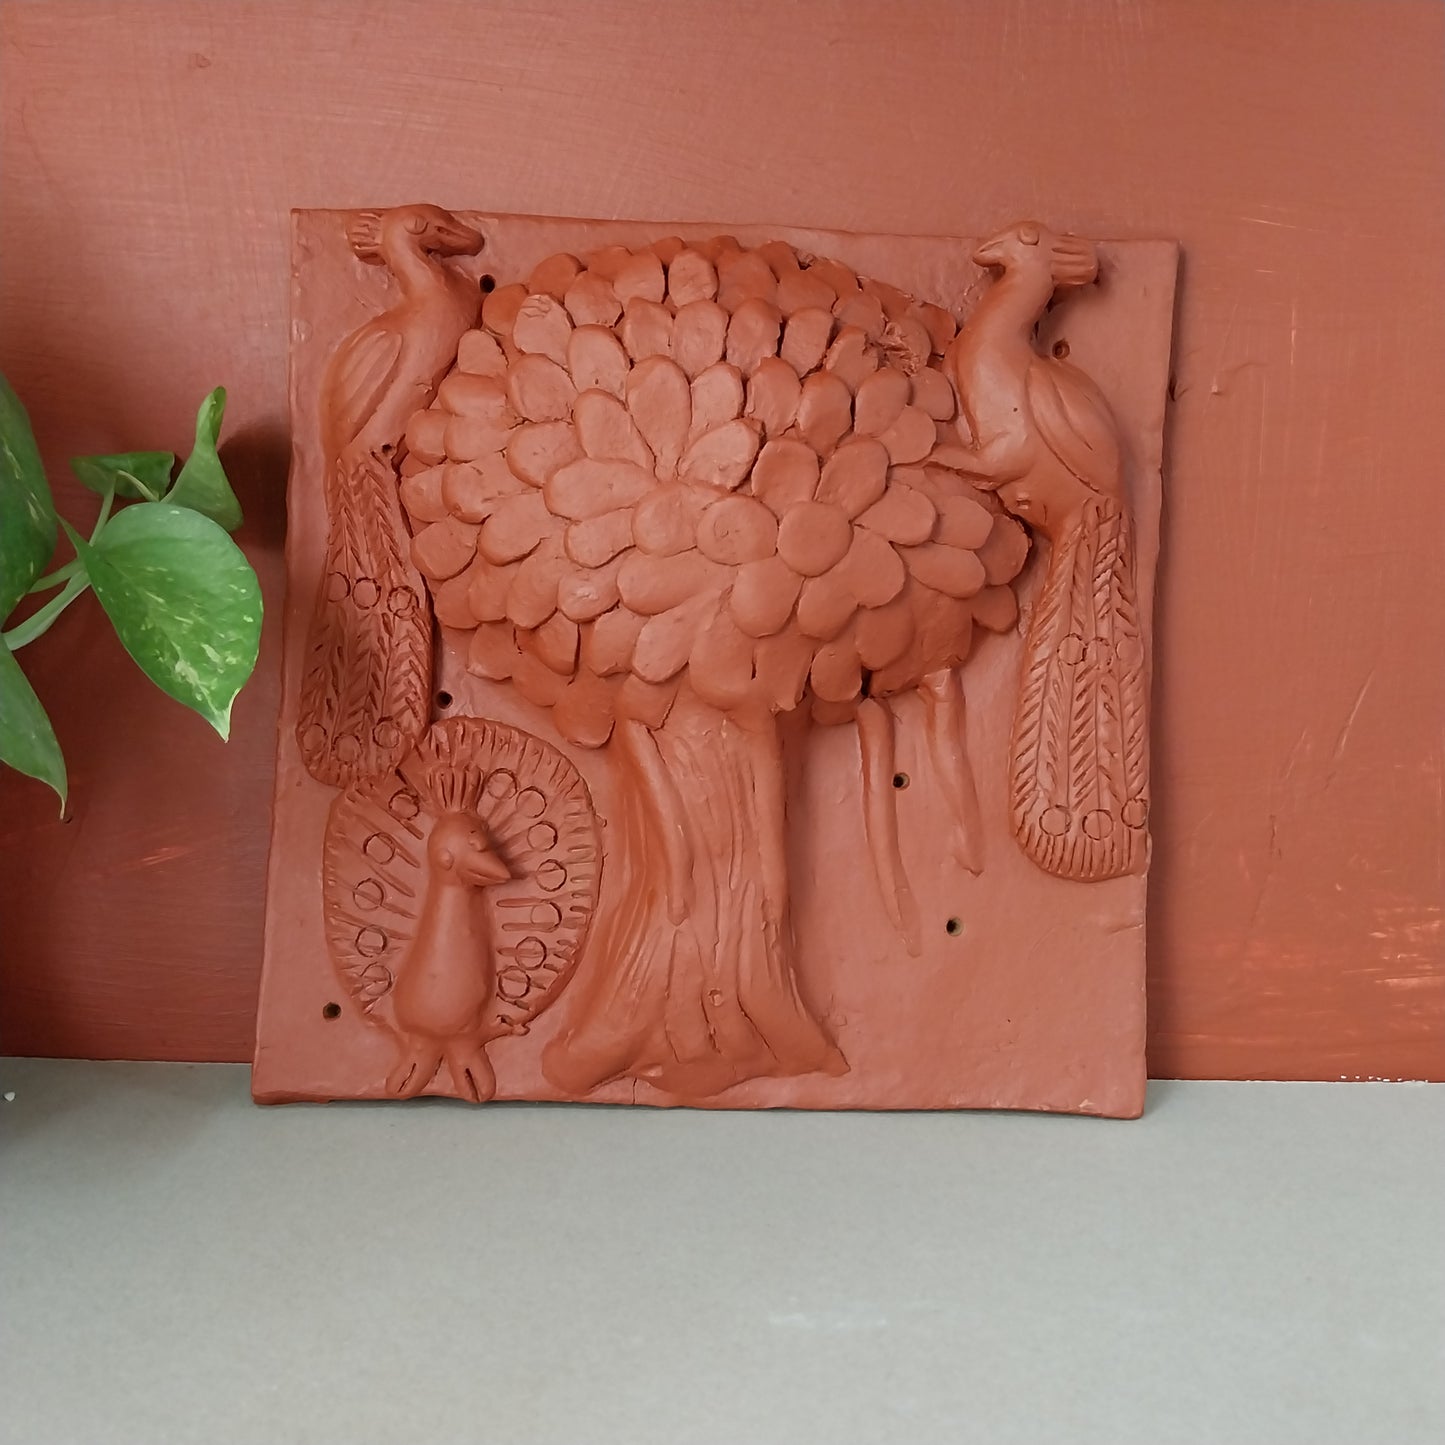 Banyan Tree & Peacock - Terracotta Tile